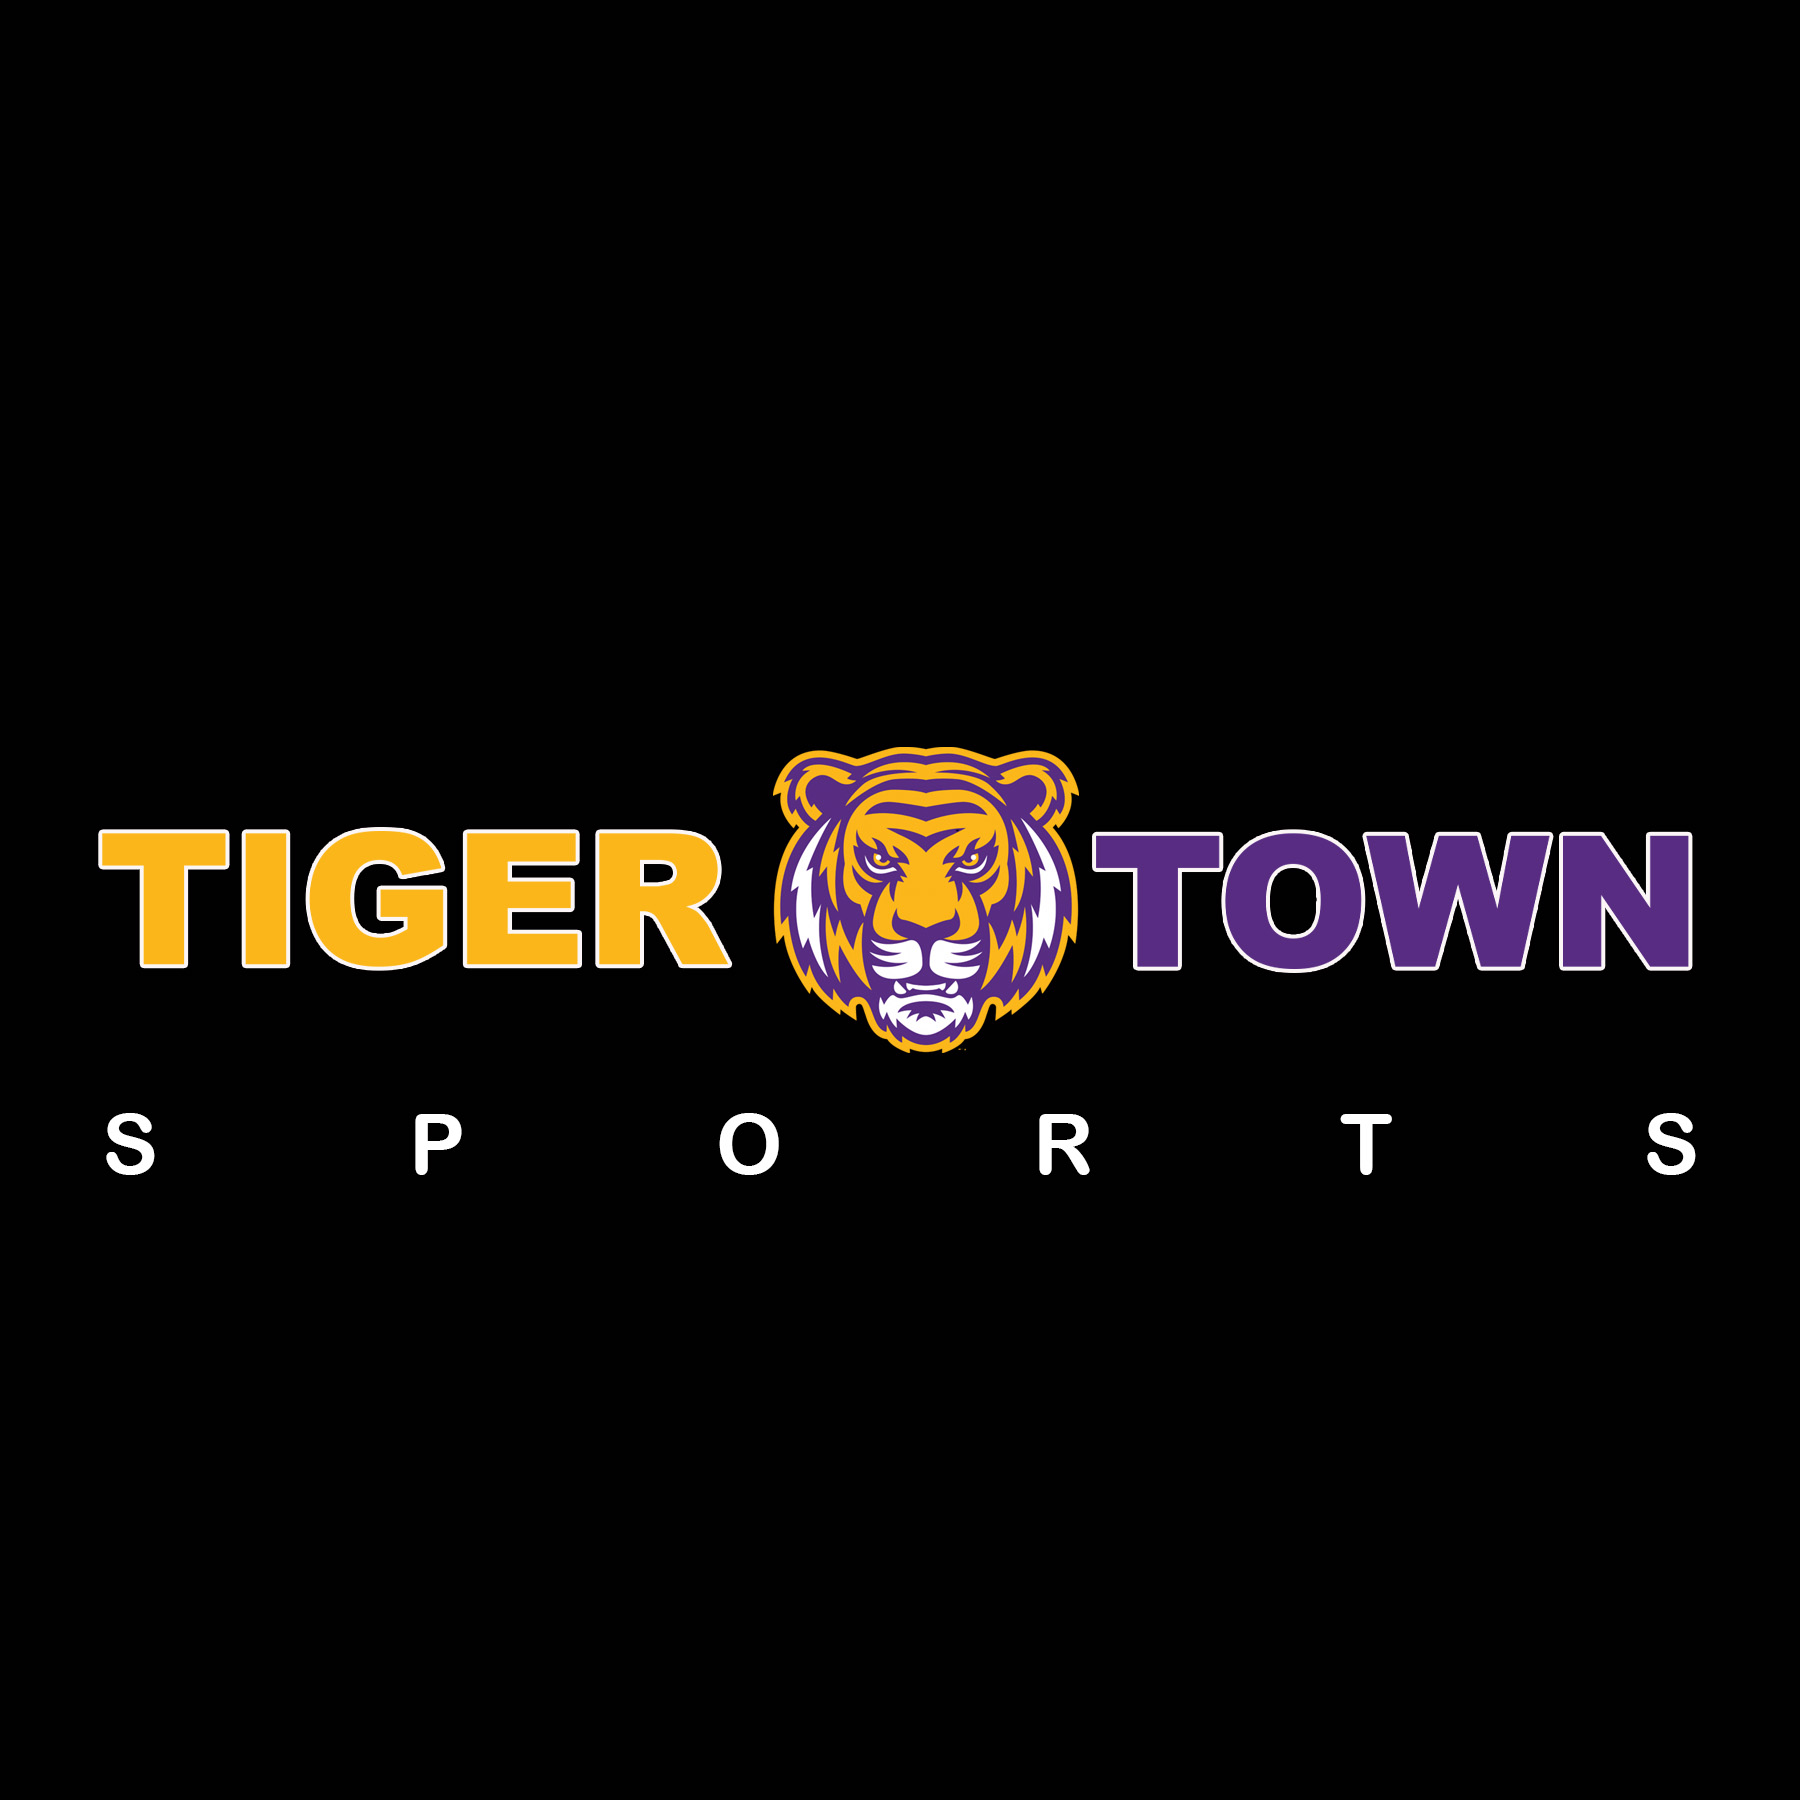 Tiger Town Sports